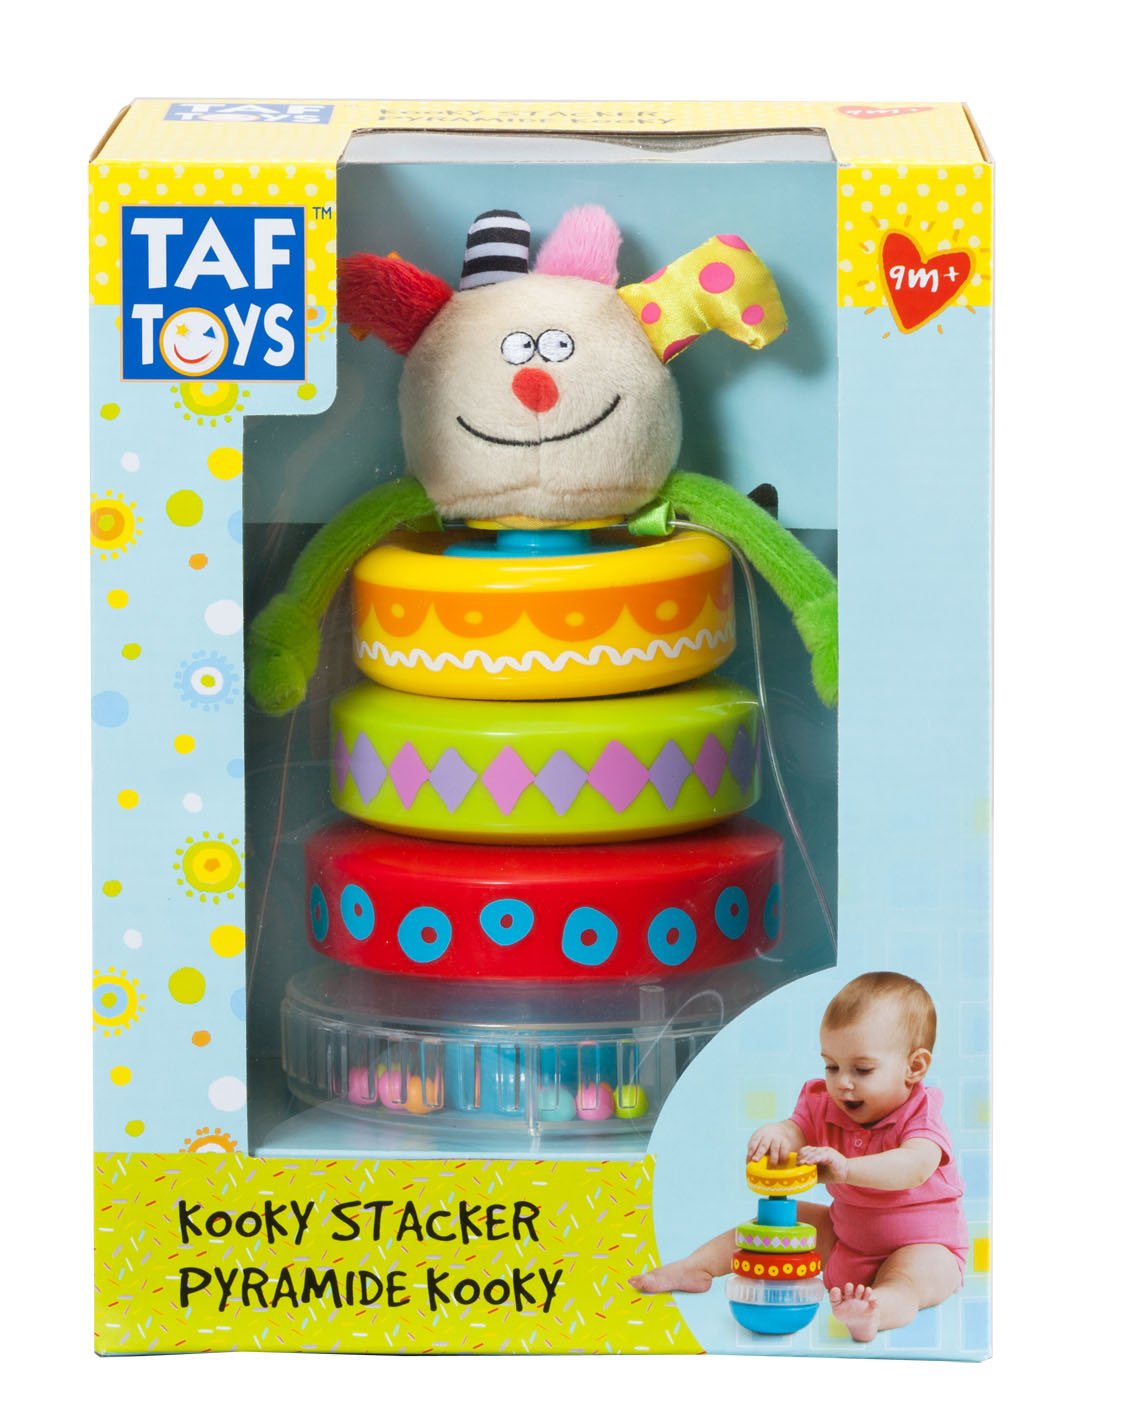 TafToys ของเล่นห่วง ห่วงซ้อนชั้น ของเล่นเรียงห่วง ห่วงเรียงซ้อน โยนห่วง Kooky Stacker TF-11365